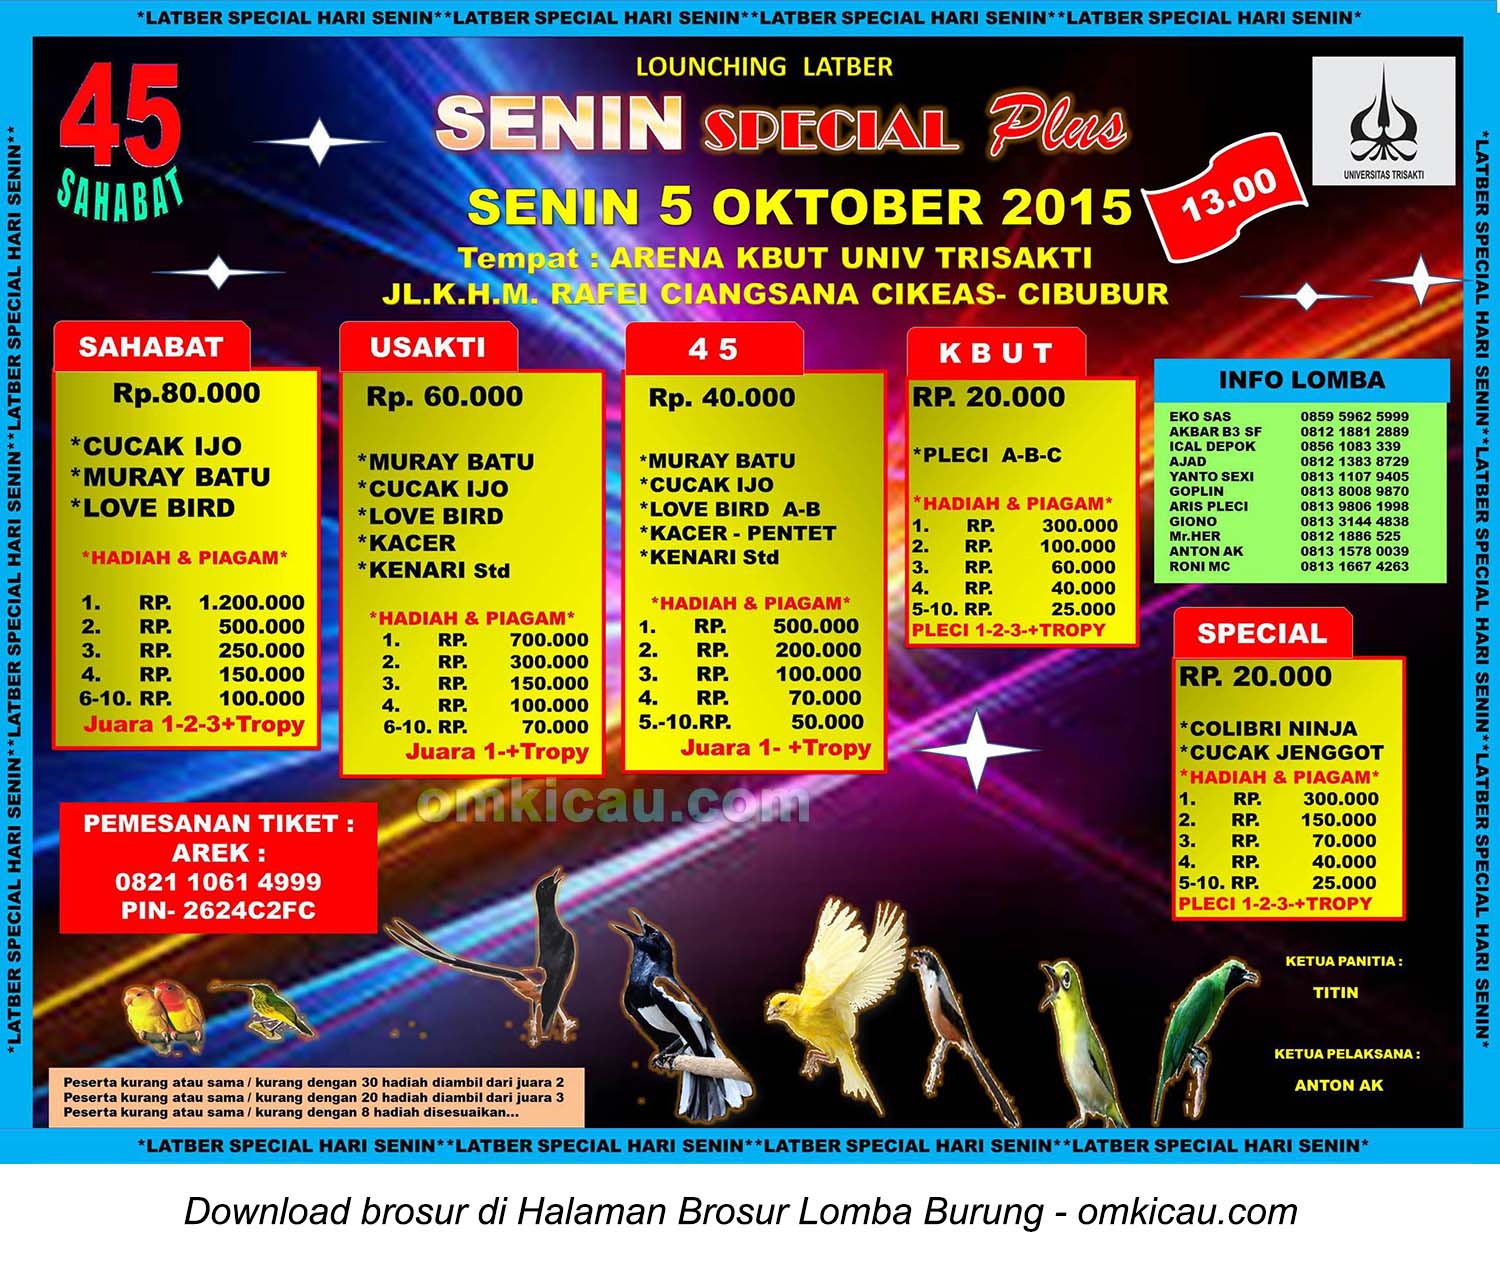 Brosur Launching Latber Senin Special 45 Sahabat, Cibubur, 5 Oktober 2015